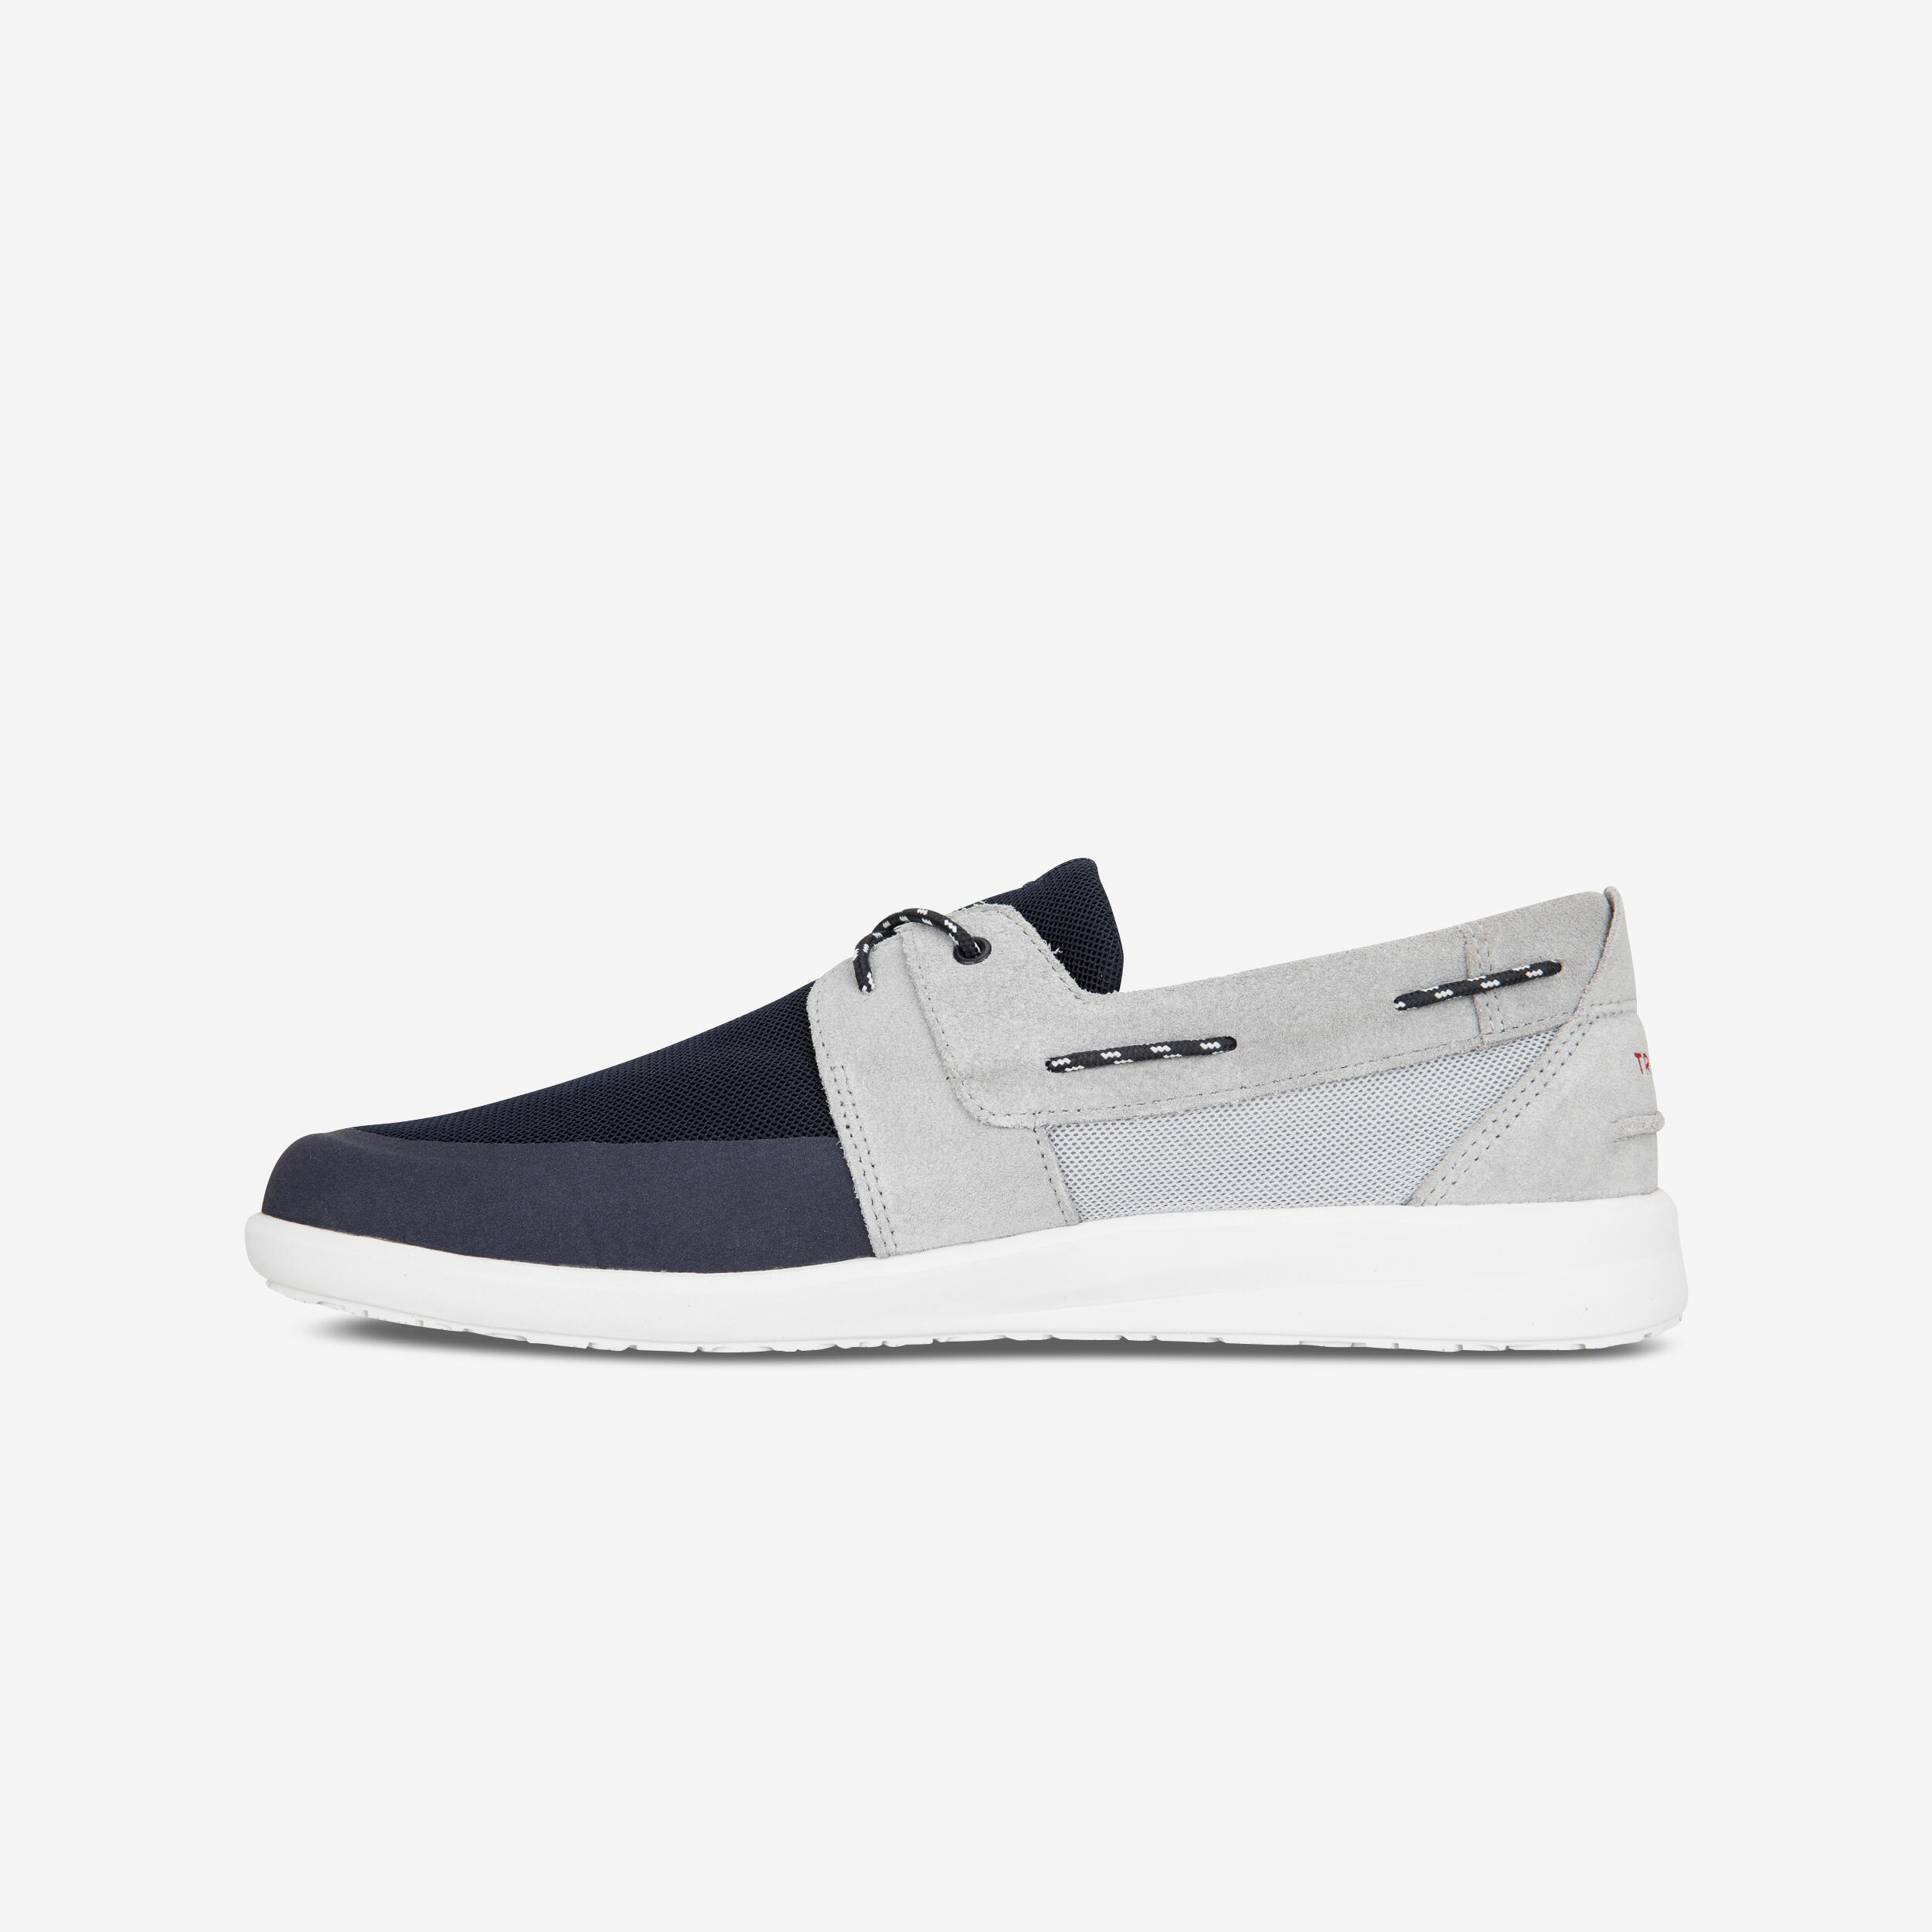 Men's Sailing Boat Shoes 100 - Grey blue 6/6